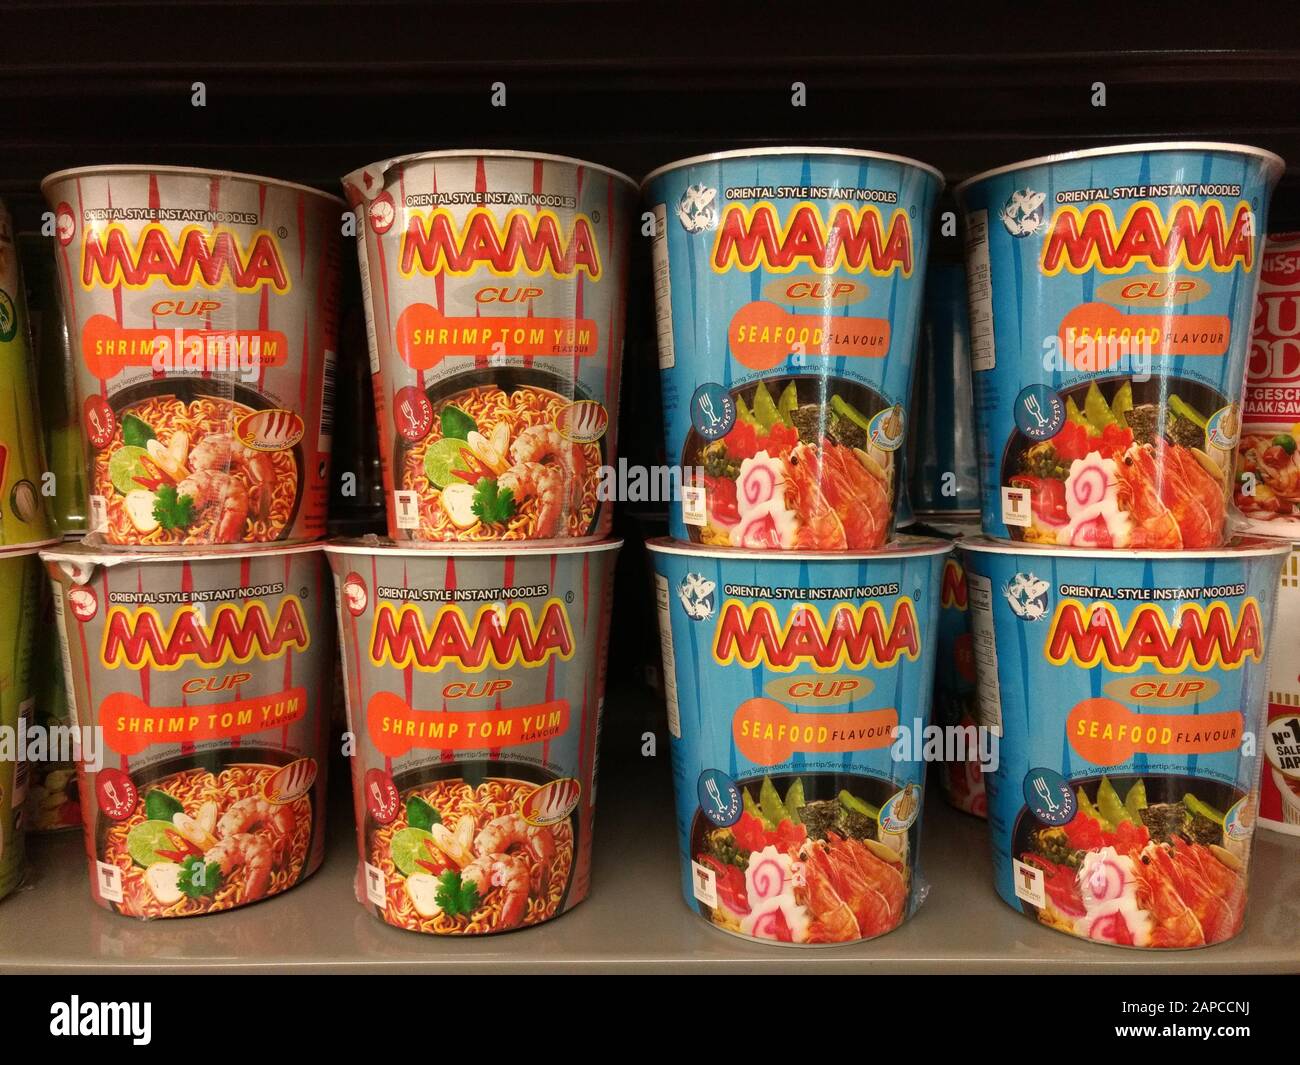 https://c8.alamy.com/comp/2APCCNJ/mama-cup-oriental-style-instant-noodles-with-seafood-flavour-2APCCNJ.jpg